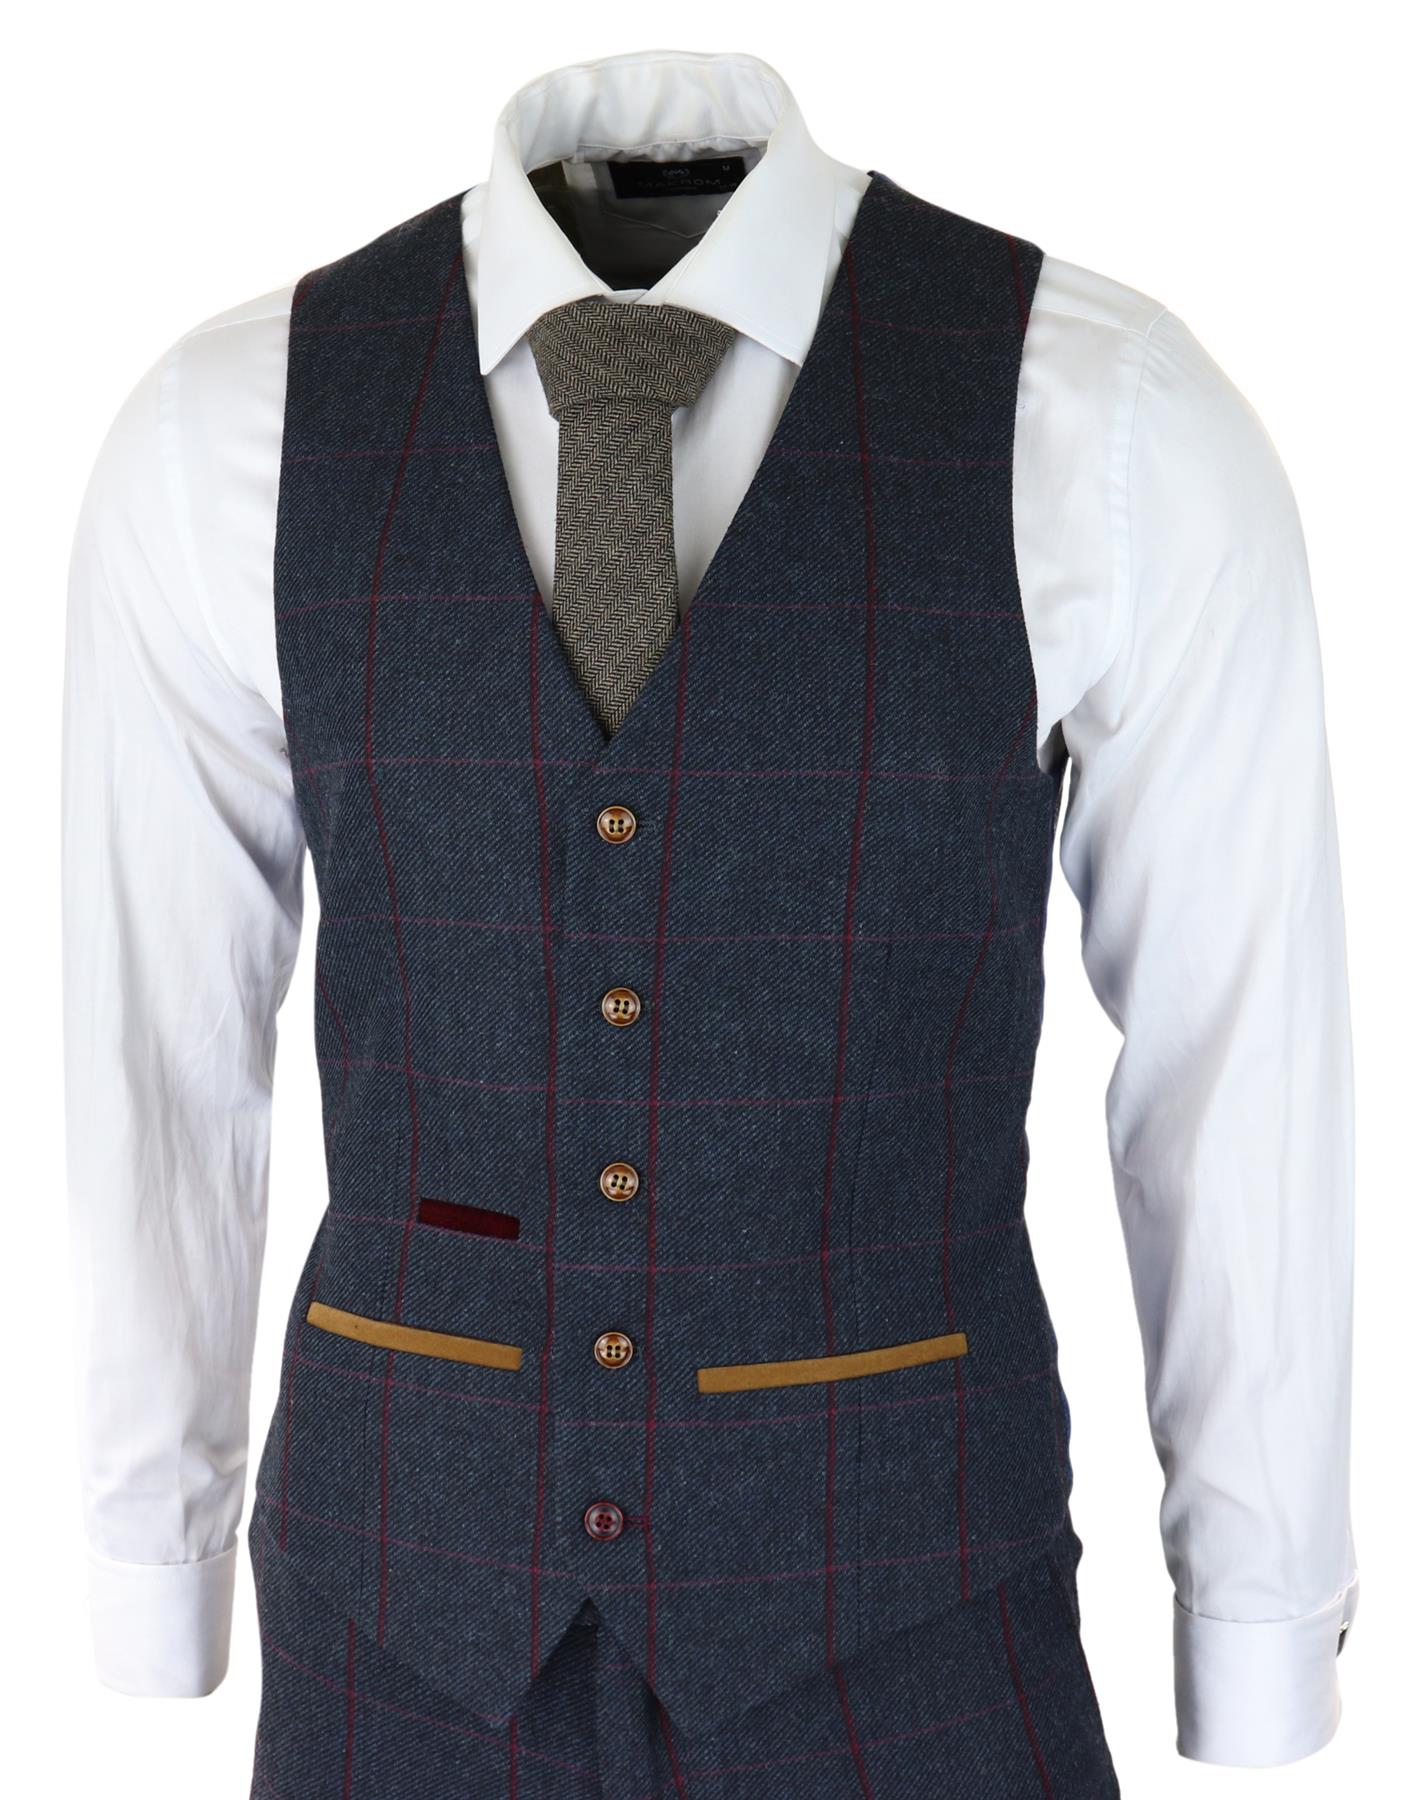 Mens Herringbone Tweed Suit 3 Piece Navy Blue Peaky Blinders 1920s Tailored Fit - Upperclass Fashions 